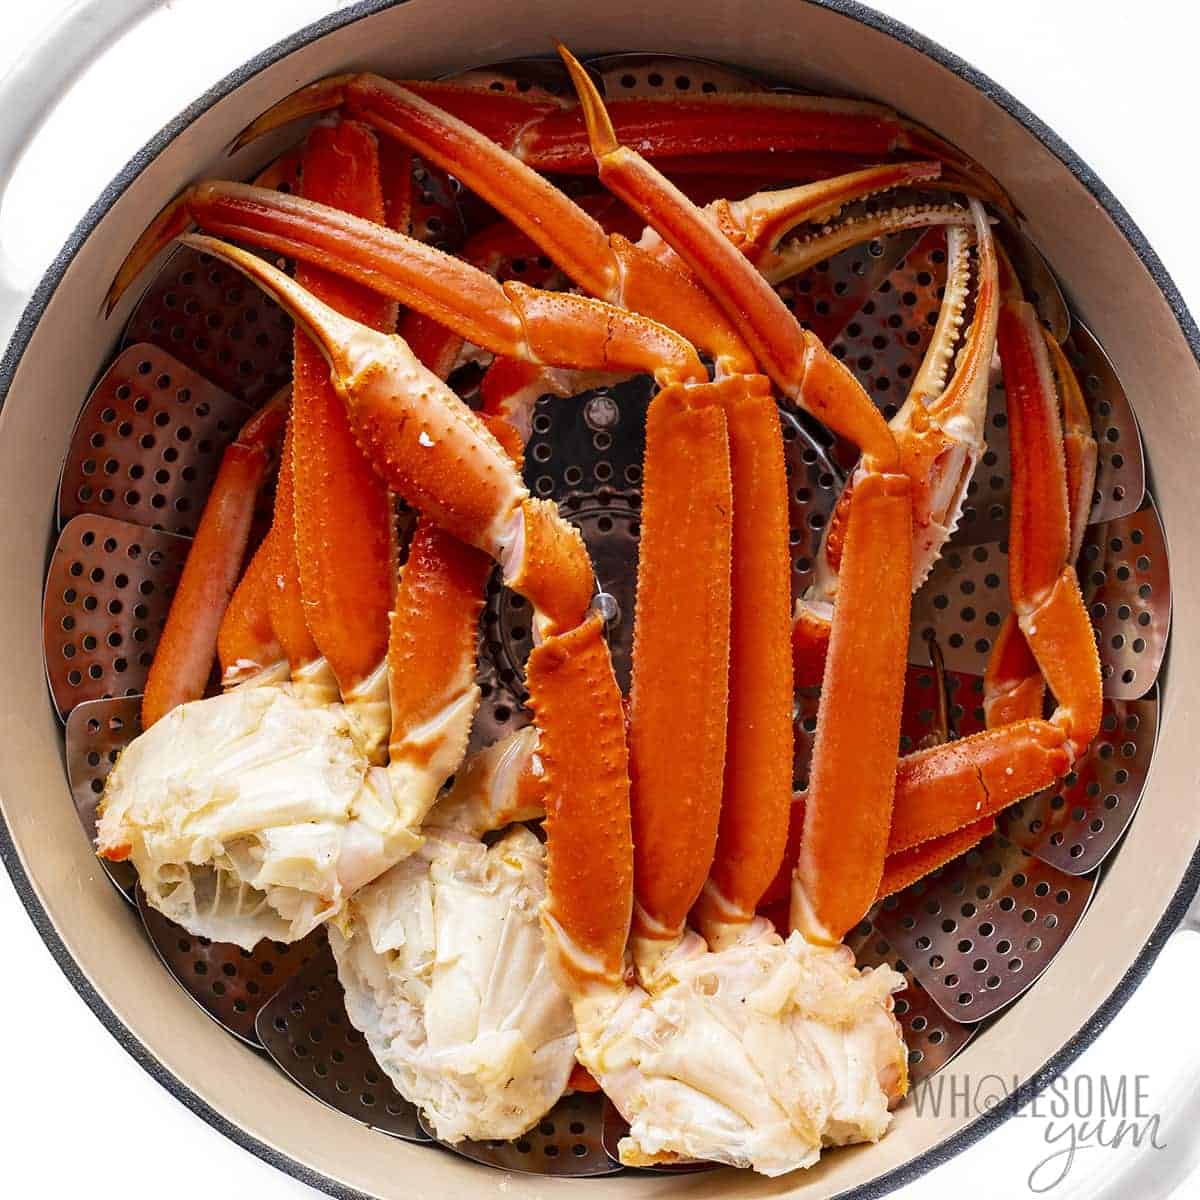 Crab legs in steamer basket